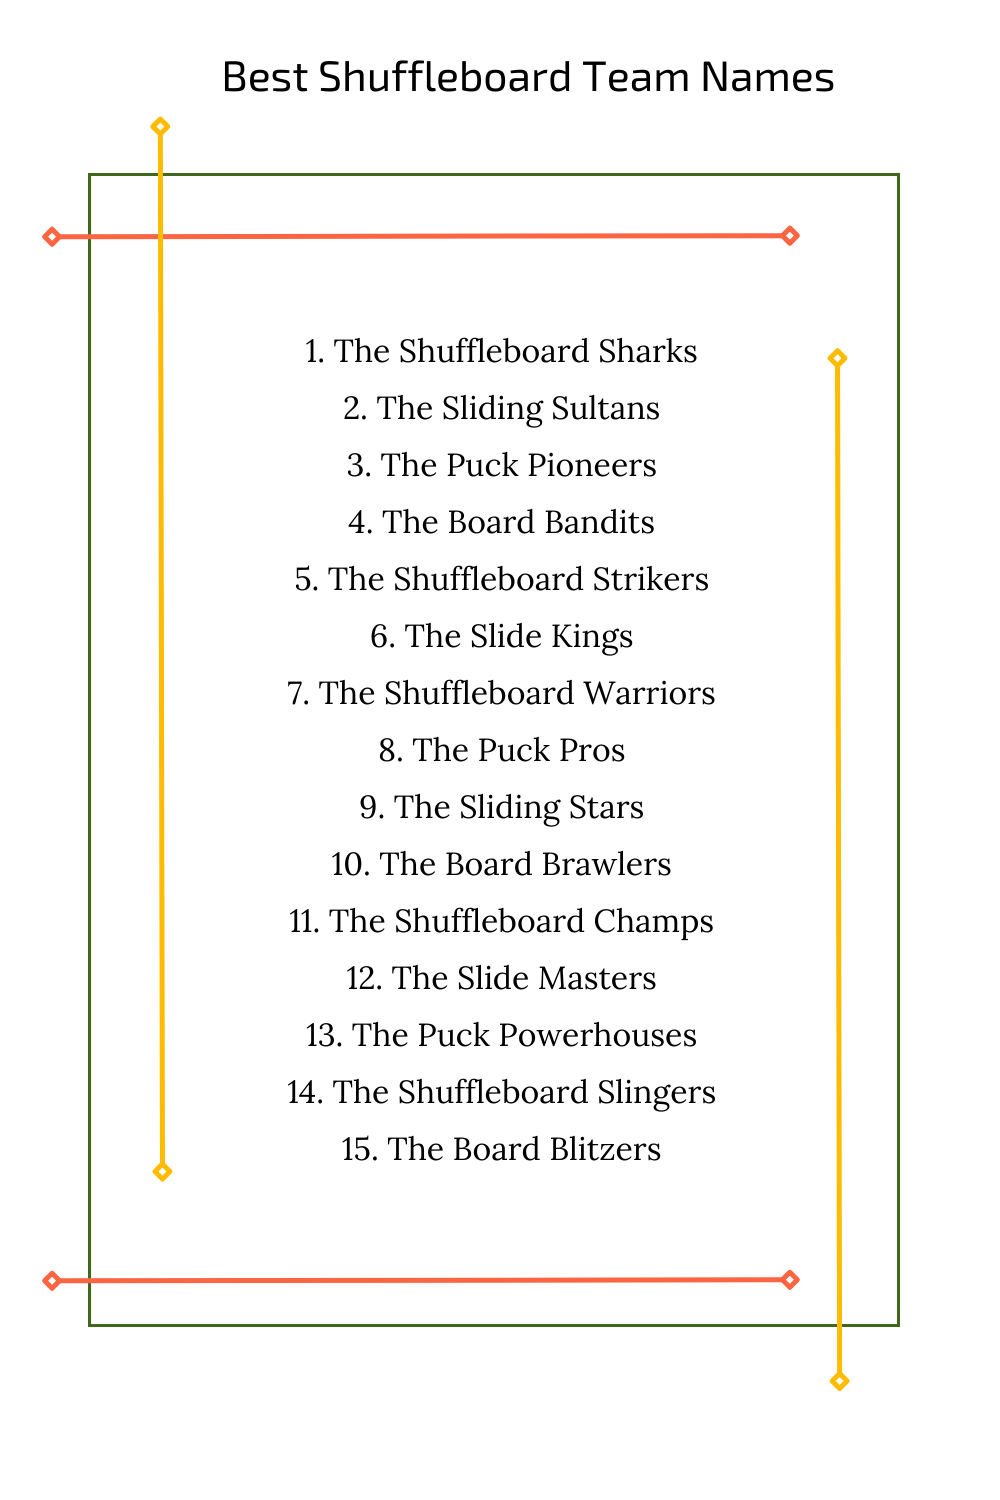 Best Shuffleboard Team Names